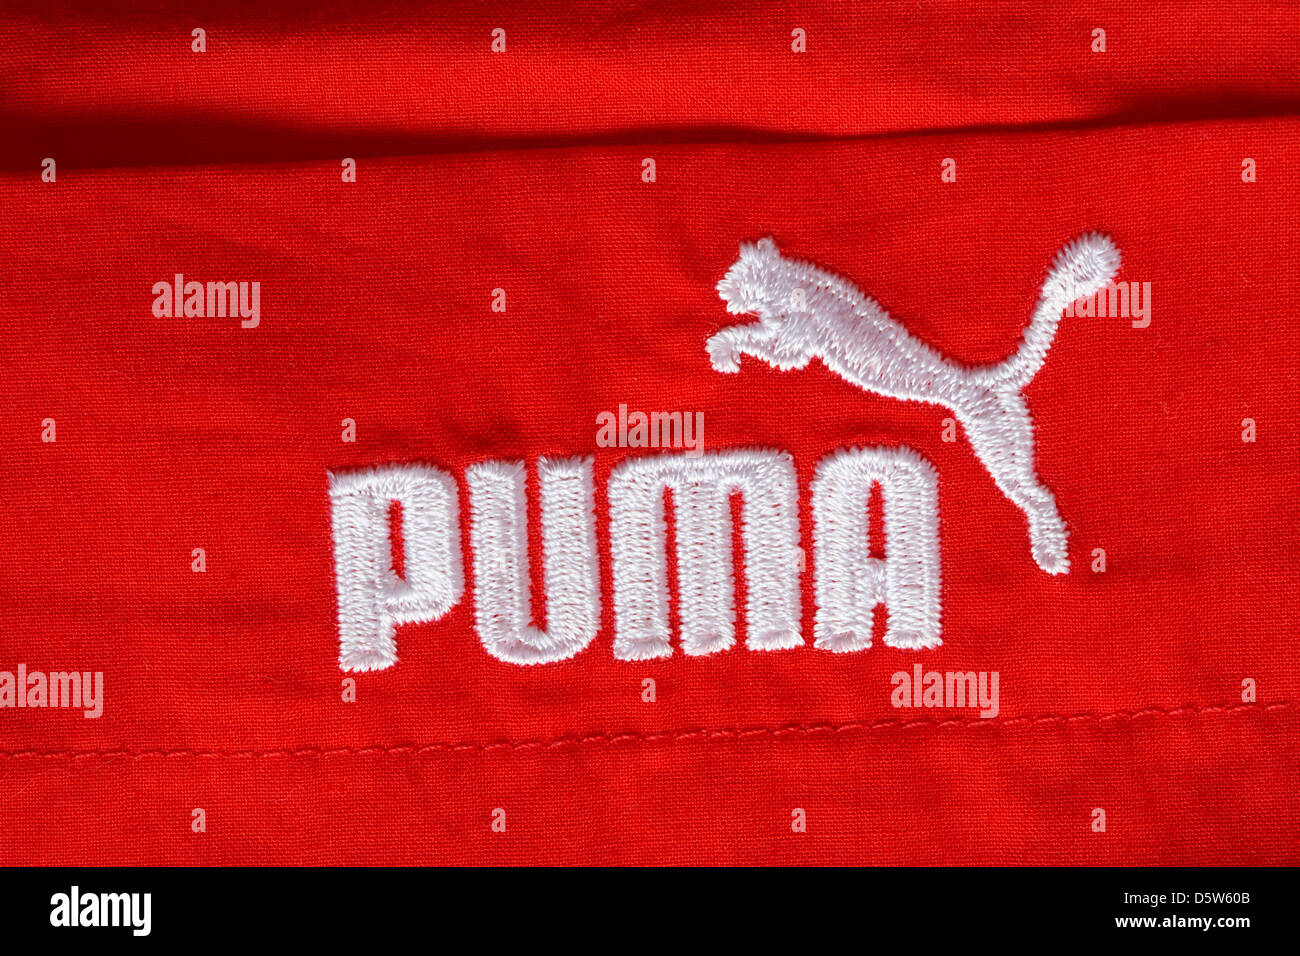 Puma logo on red top Stock Photo